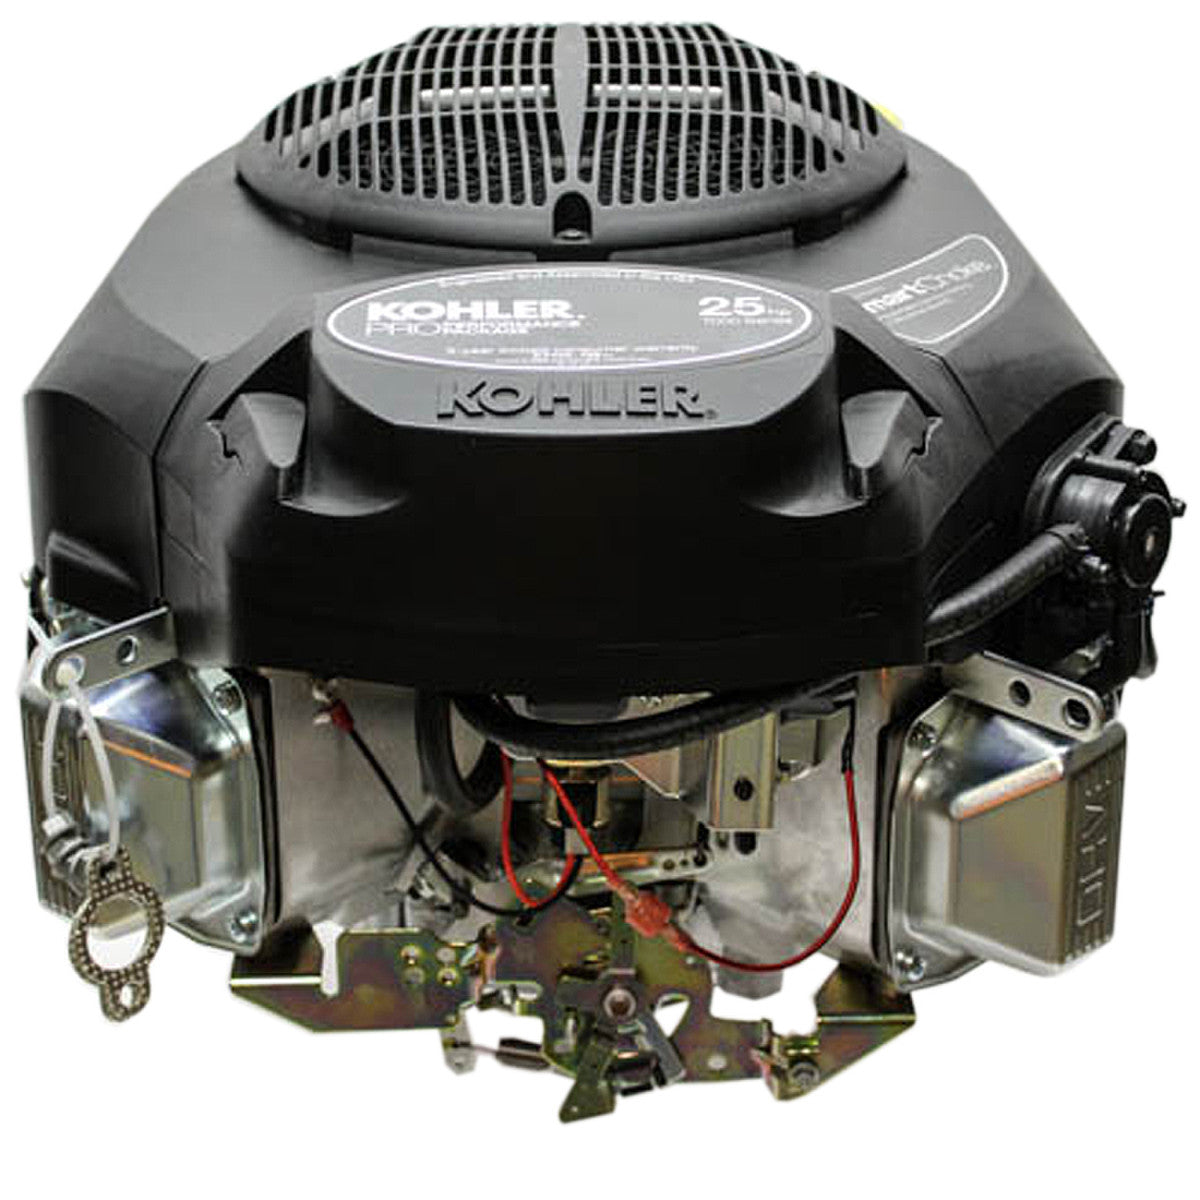 Kohler 7000 Series 25HP Replacement Engine #KT740-3042